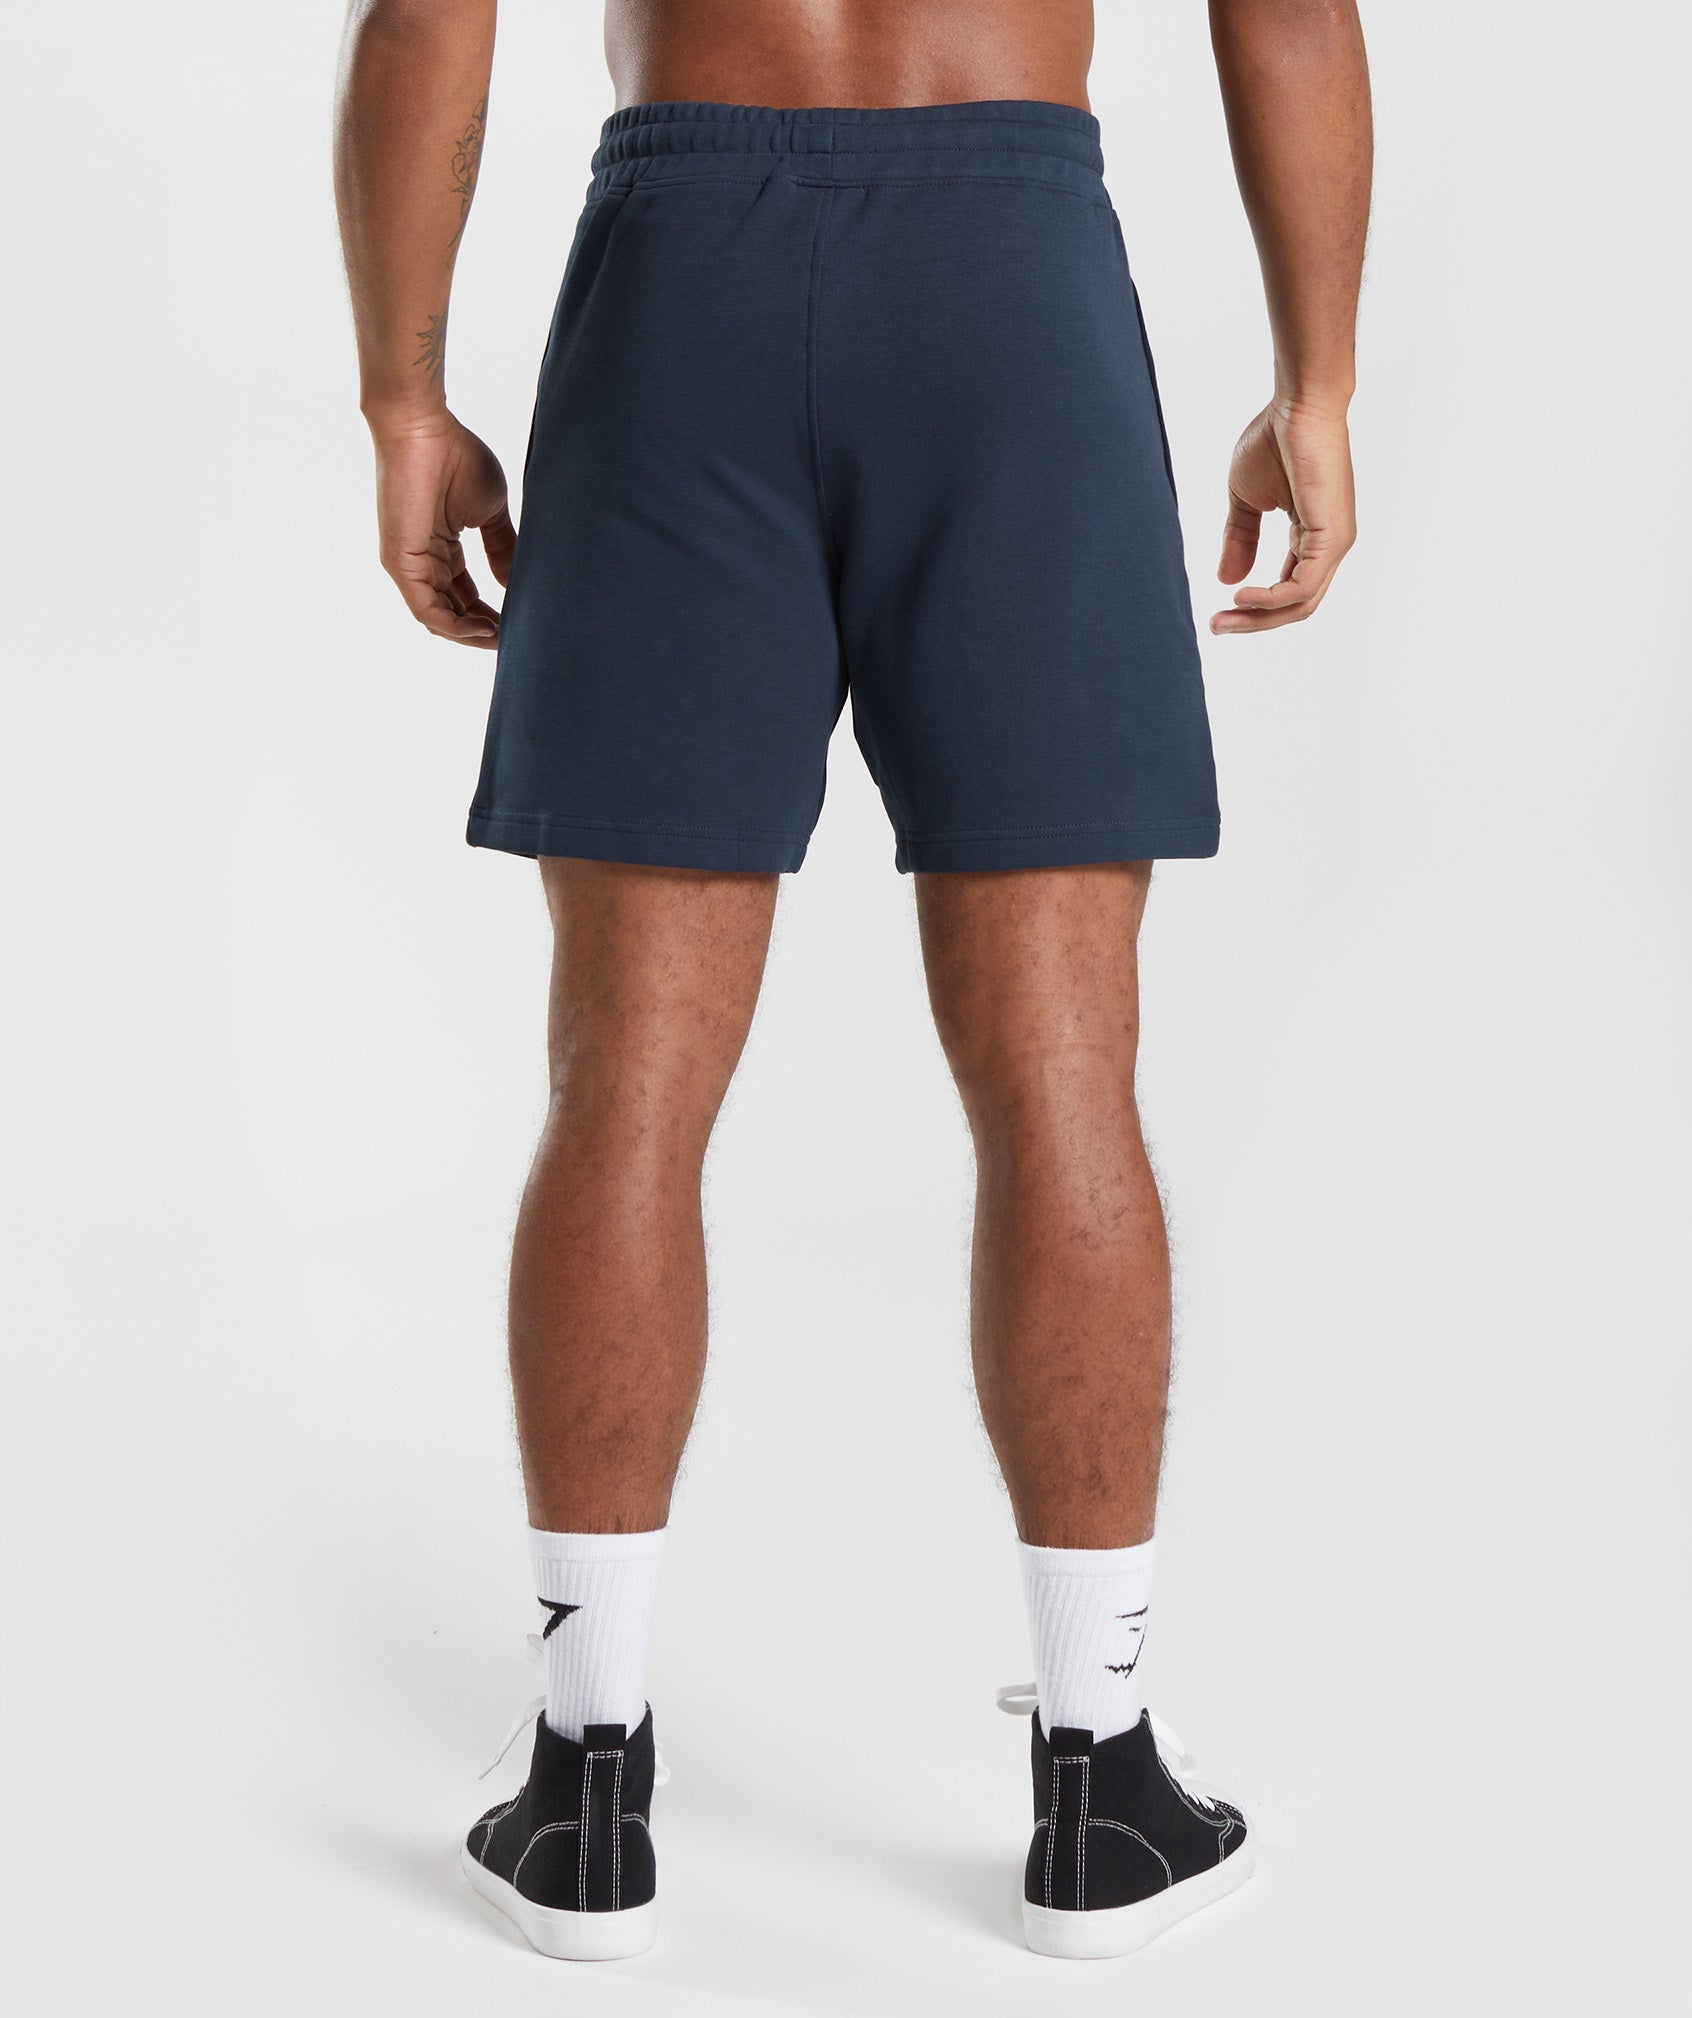 React 7" Shorts in Navy